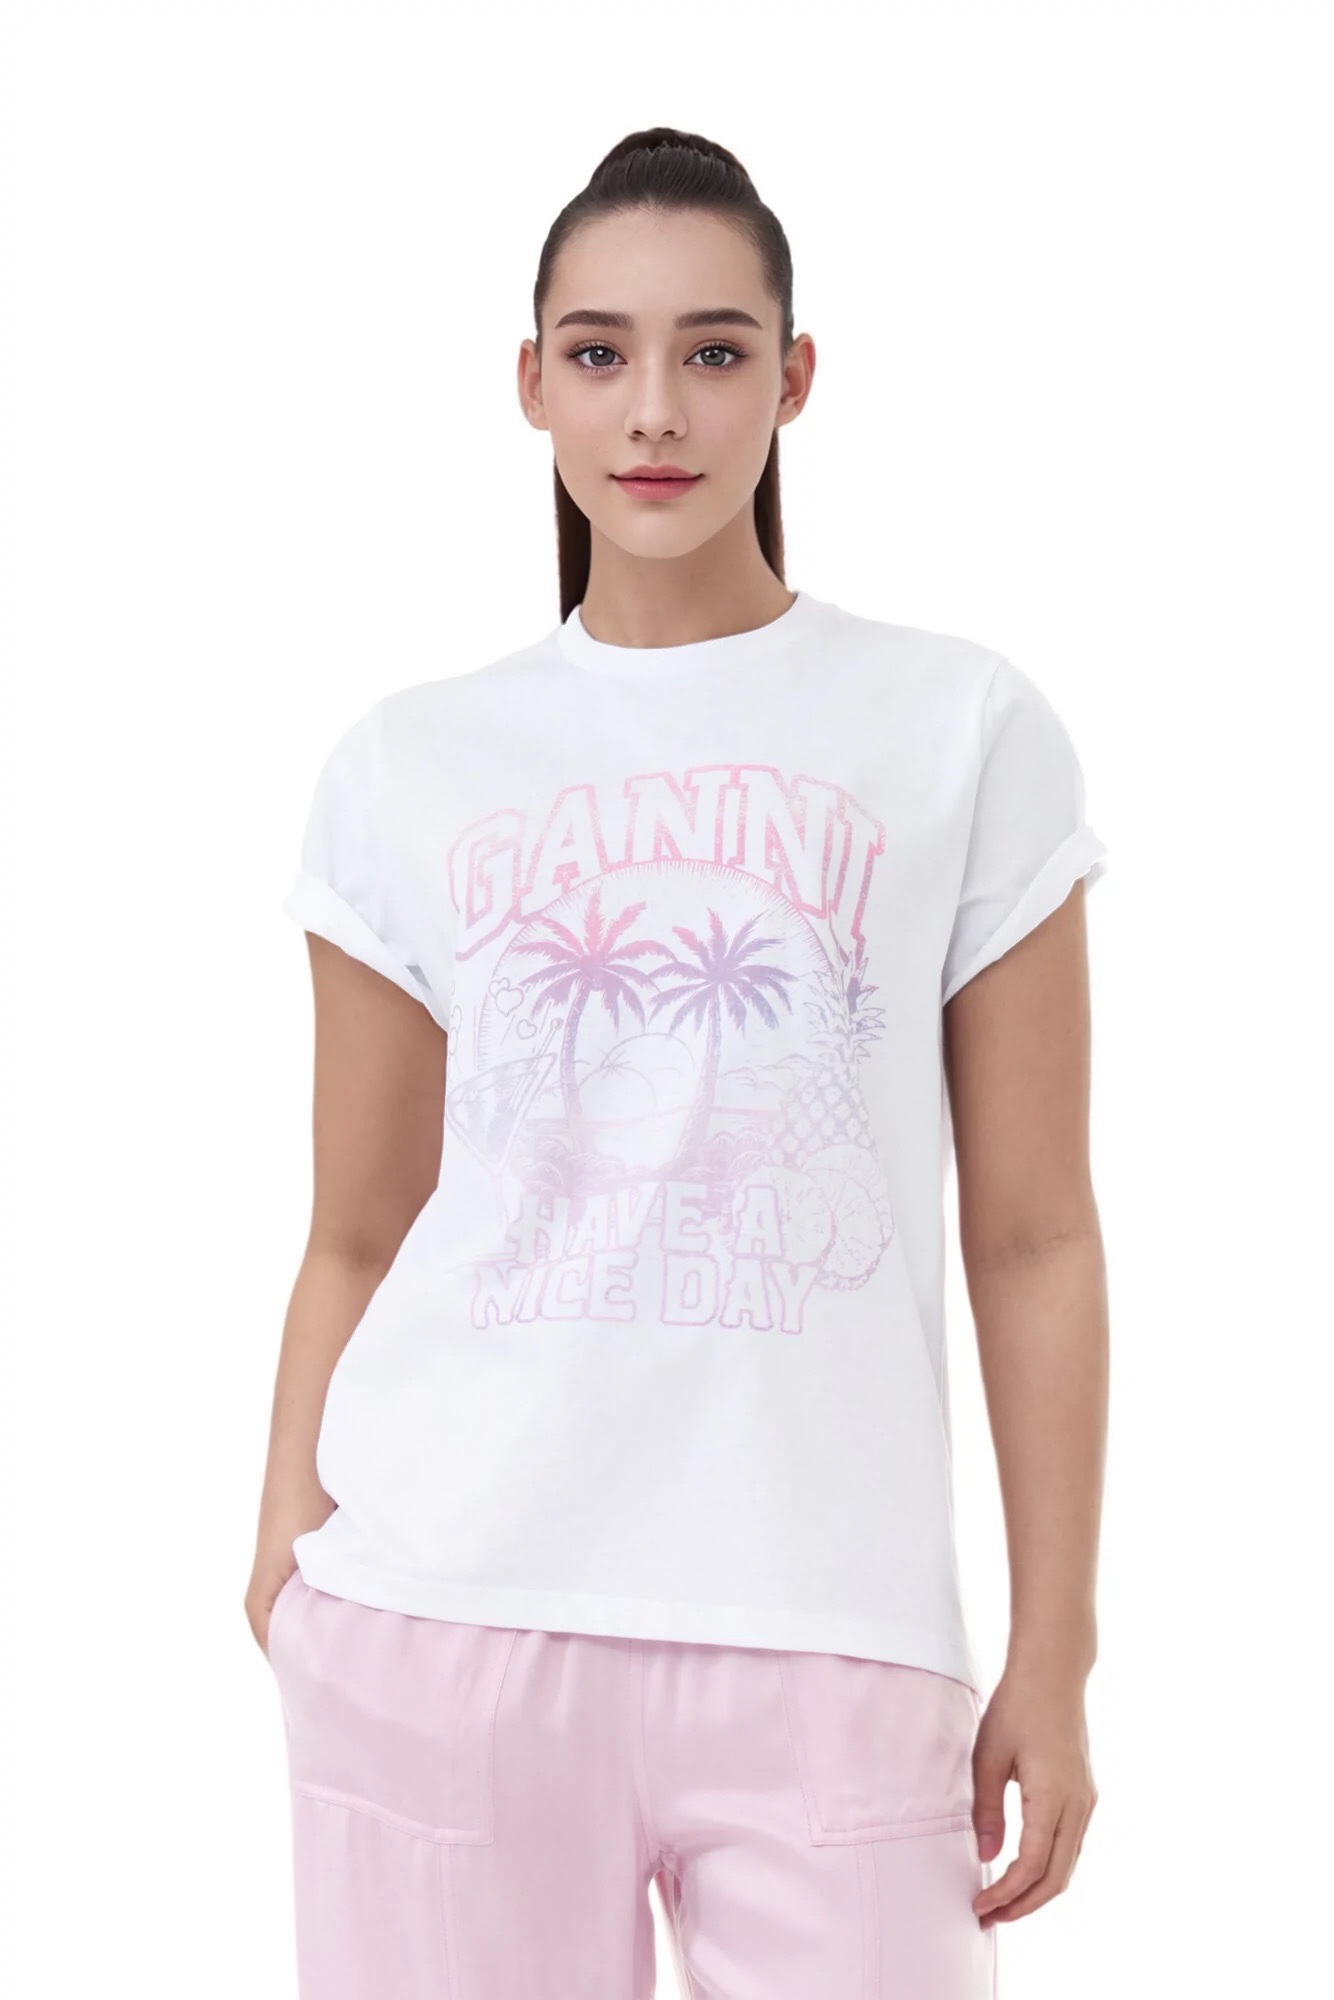 Ganni Clothing T-Shirt Cotton Summer Collection Short Sleeve